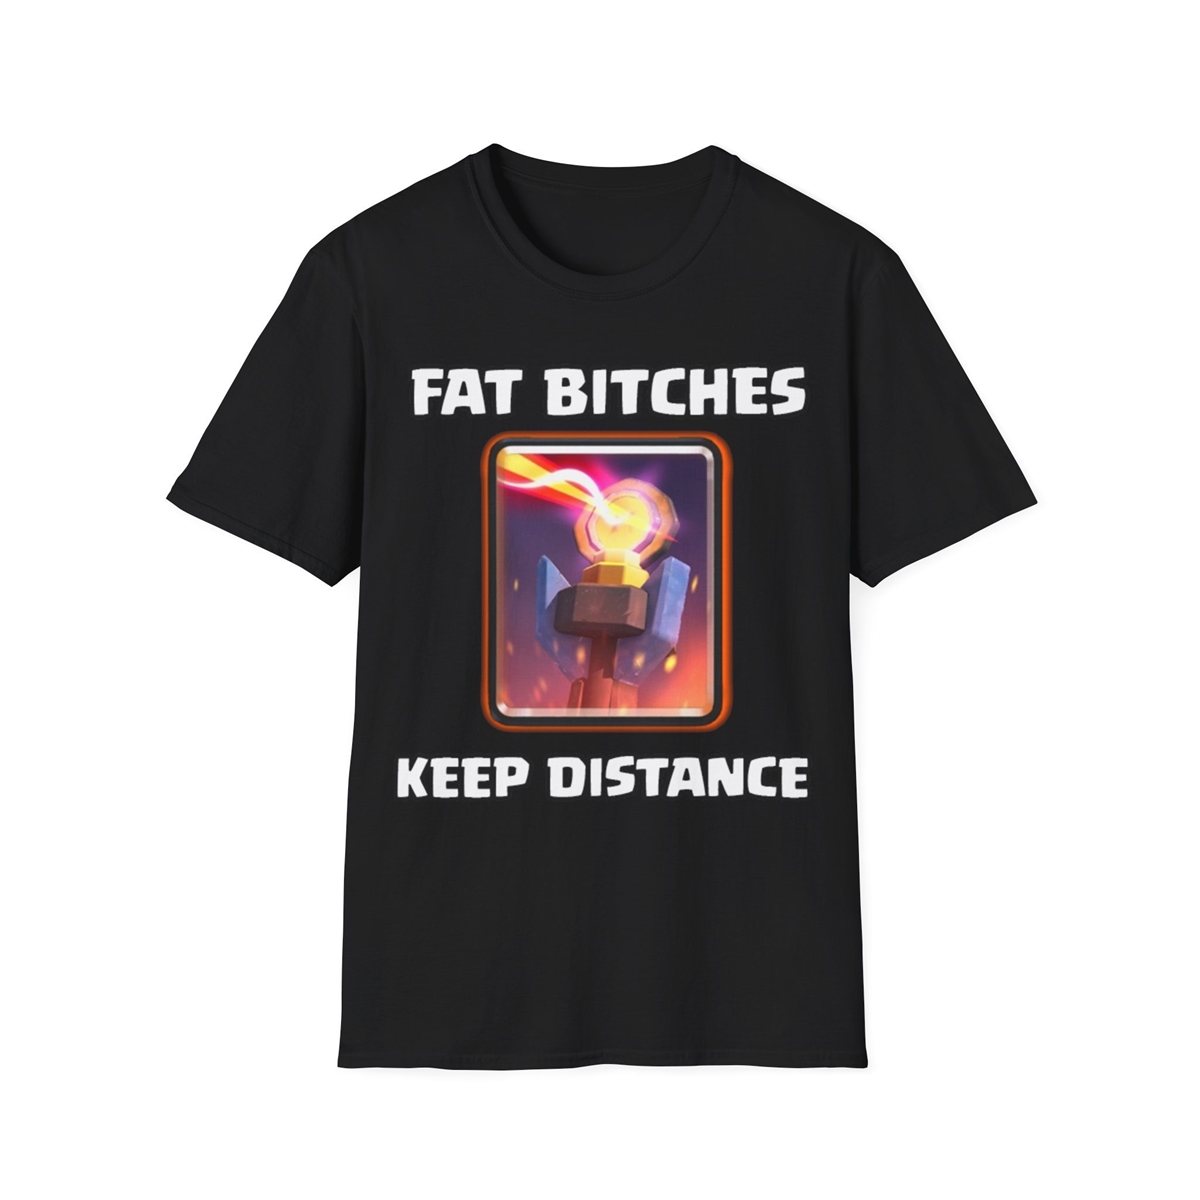 Fat Btches Keep Distance Unisex T-shirt Clash Royale Shirtmeme Shirtgymshirtfunny Shirt Gaming Shirt Printed Graphic Tee Gift Idea